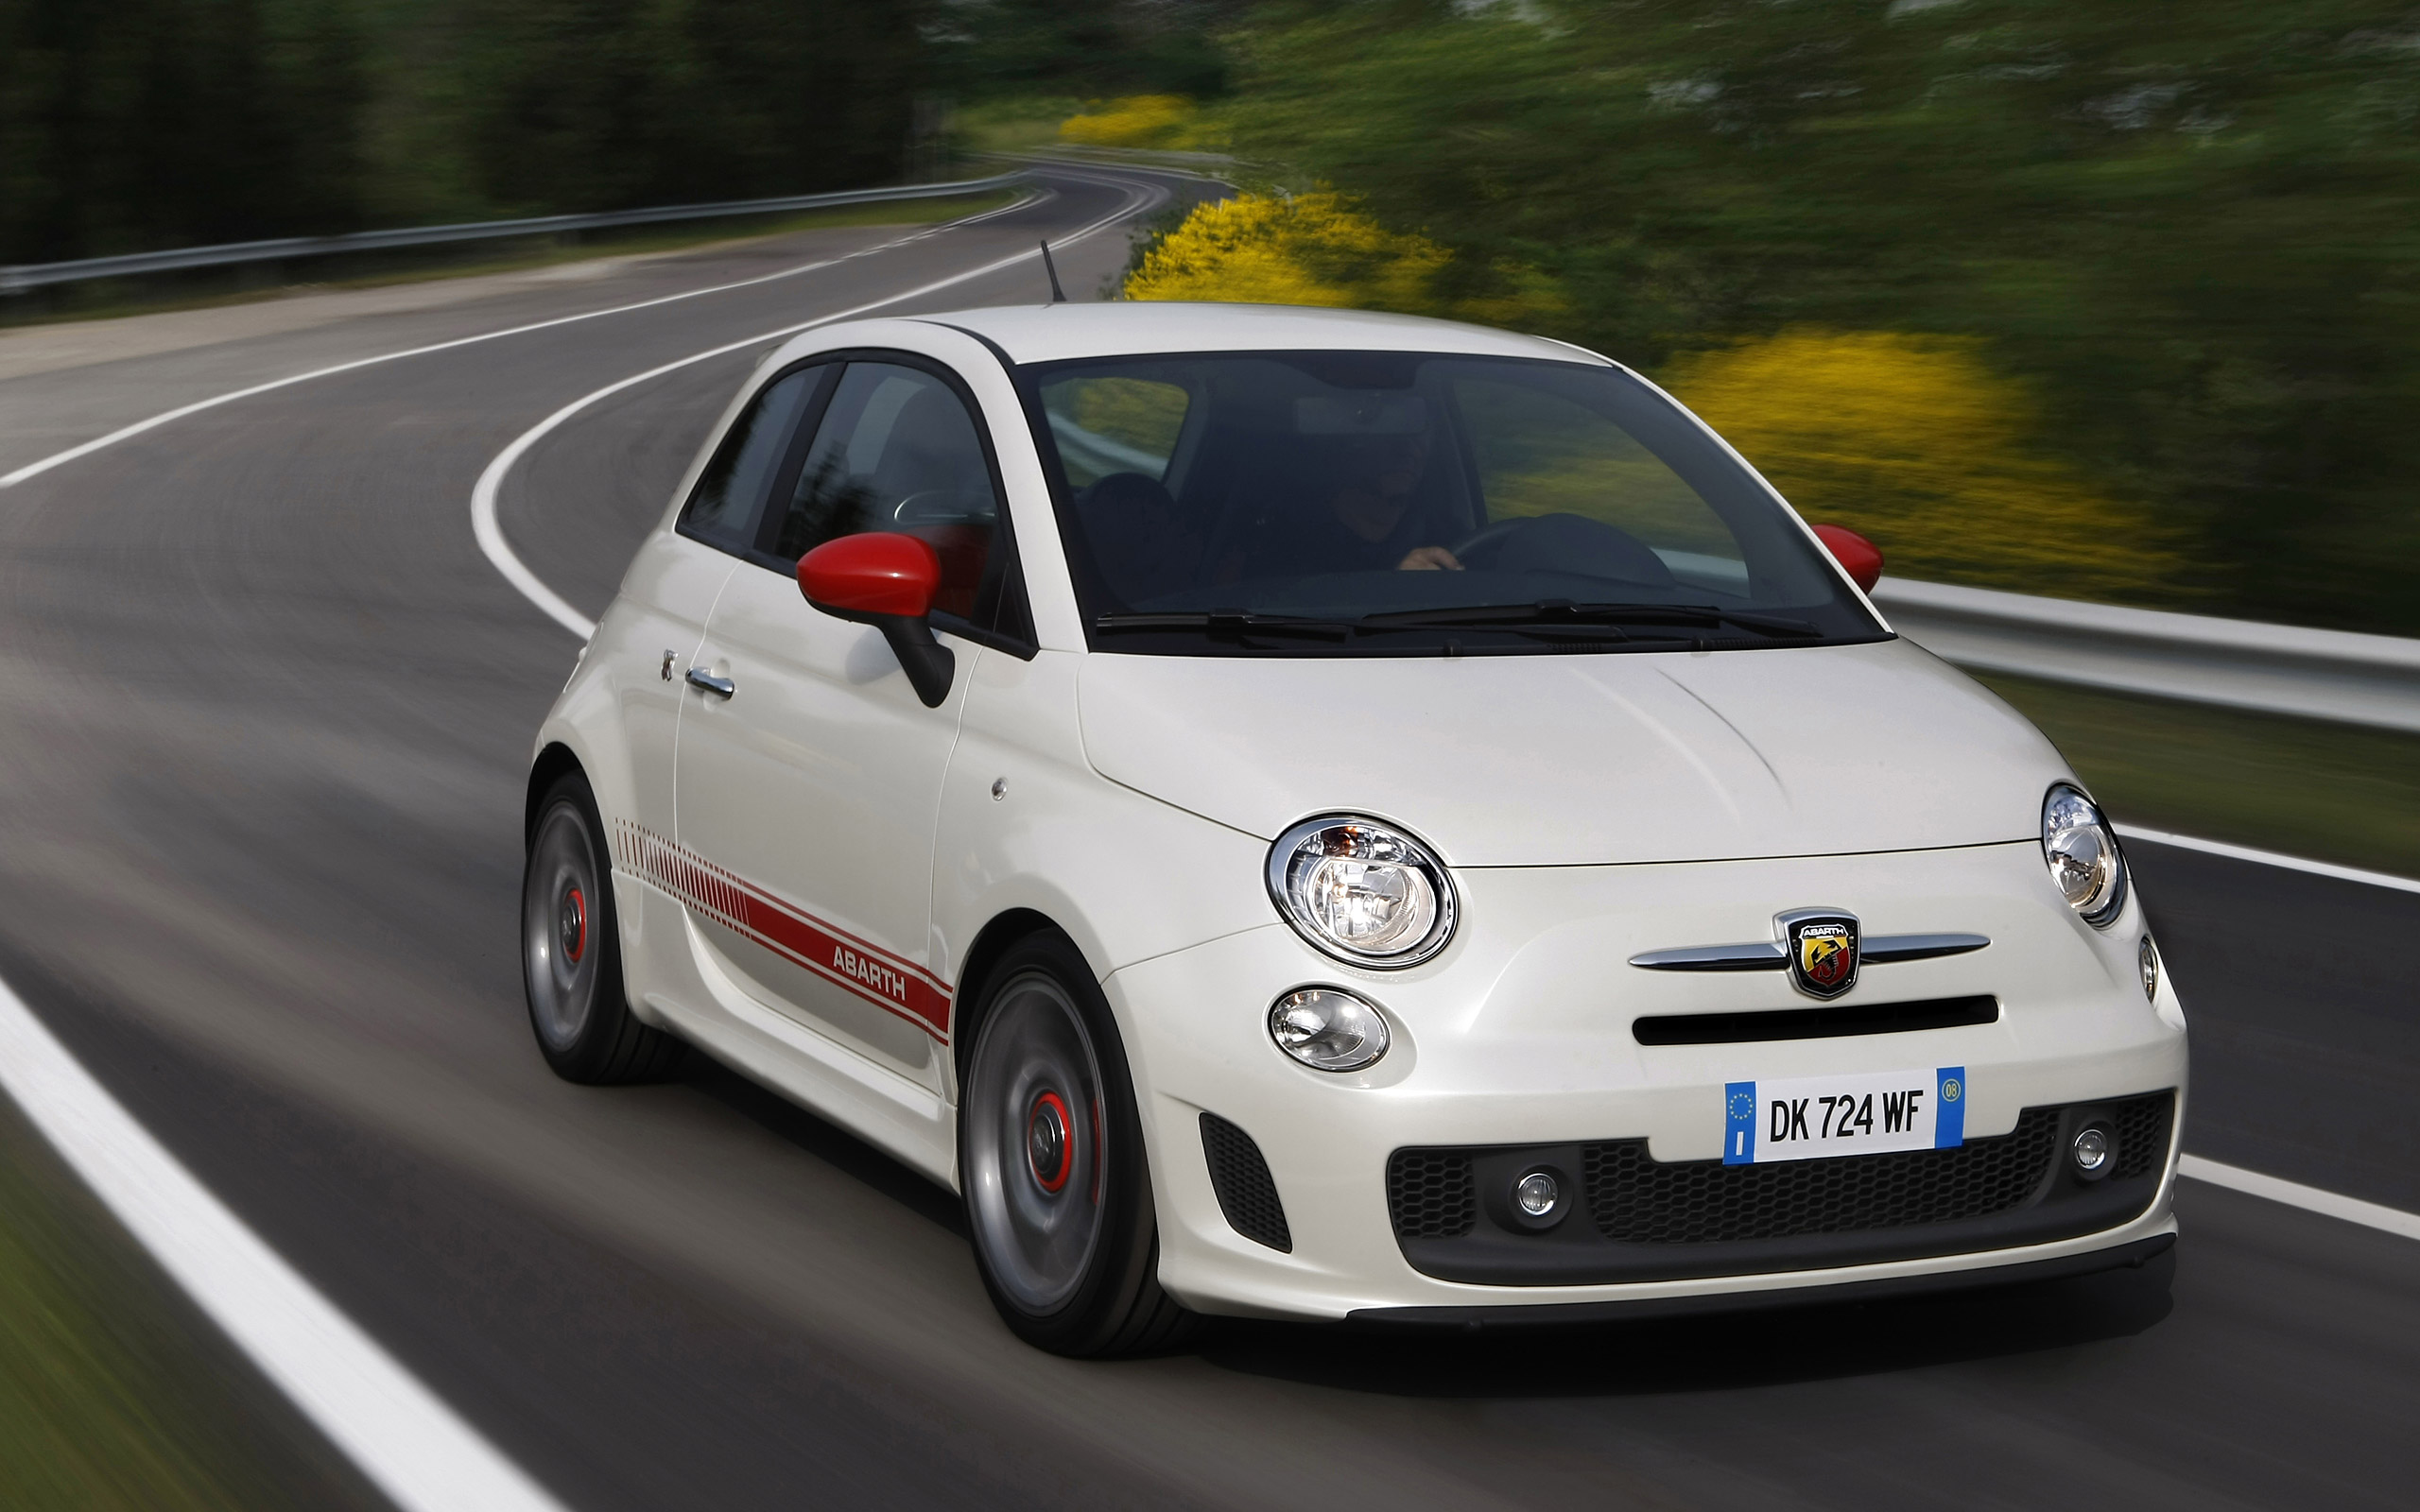  2009 Fiat Abarth 500 Wallpaper.